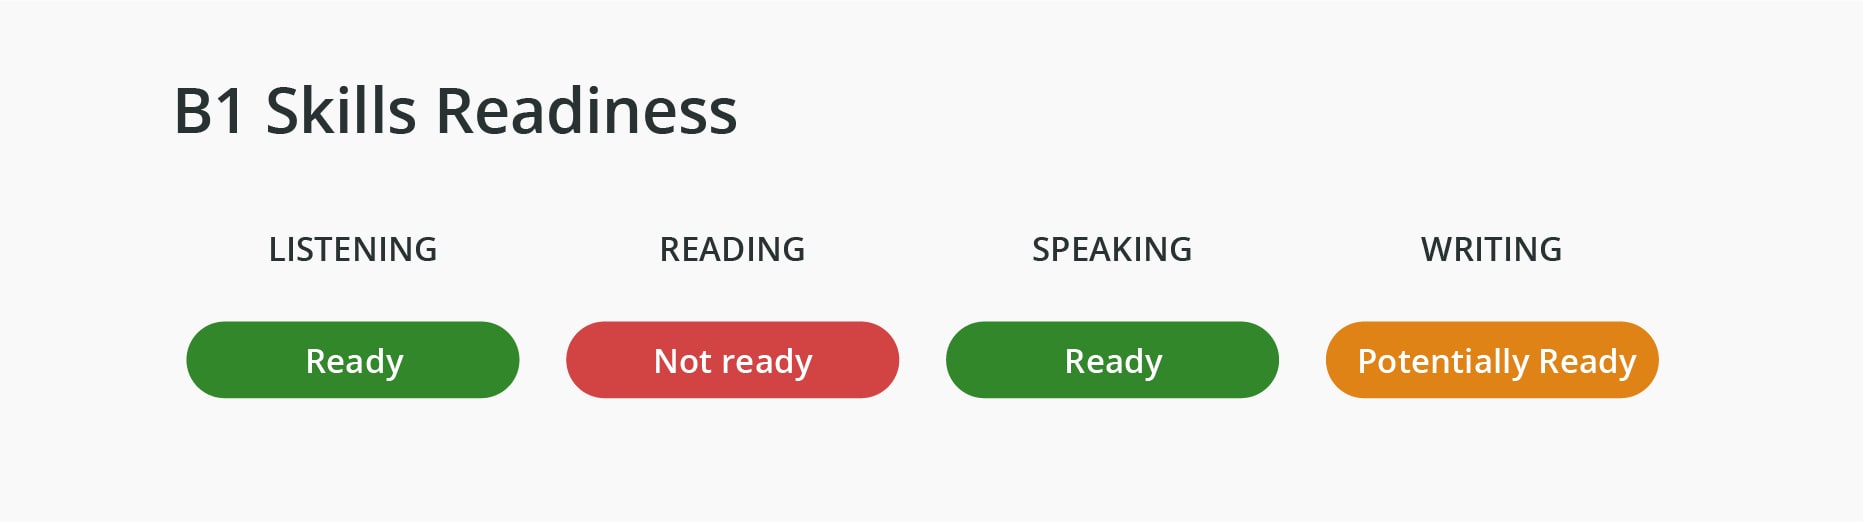 Screenshot example of readiness breakdown across skills